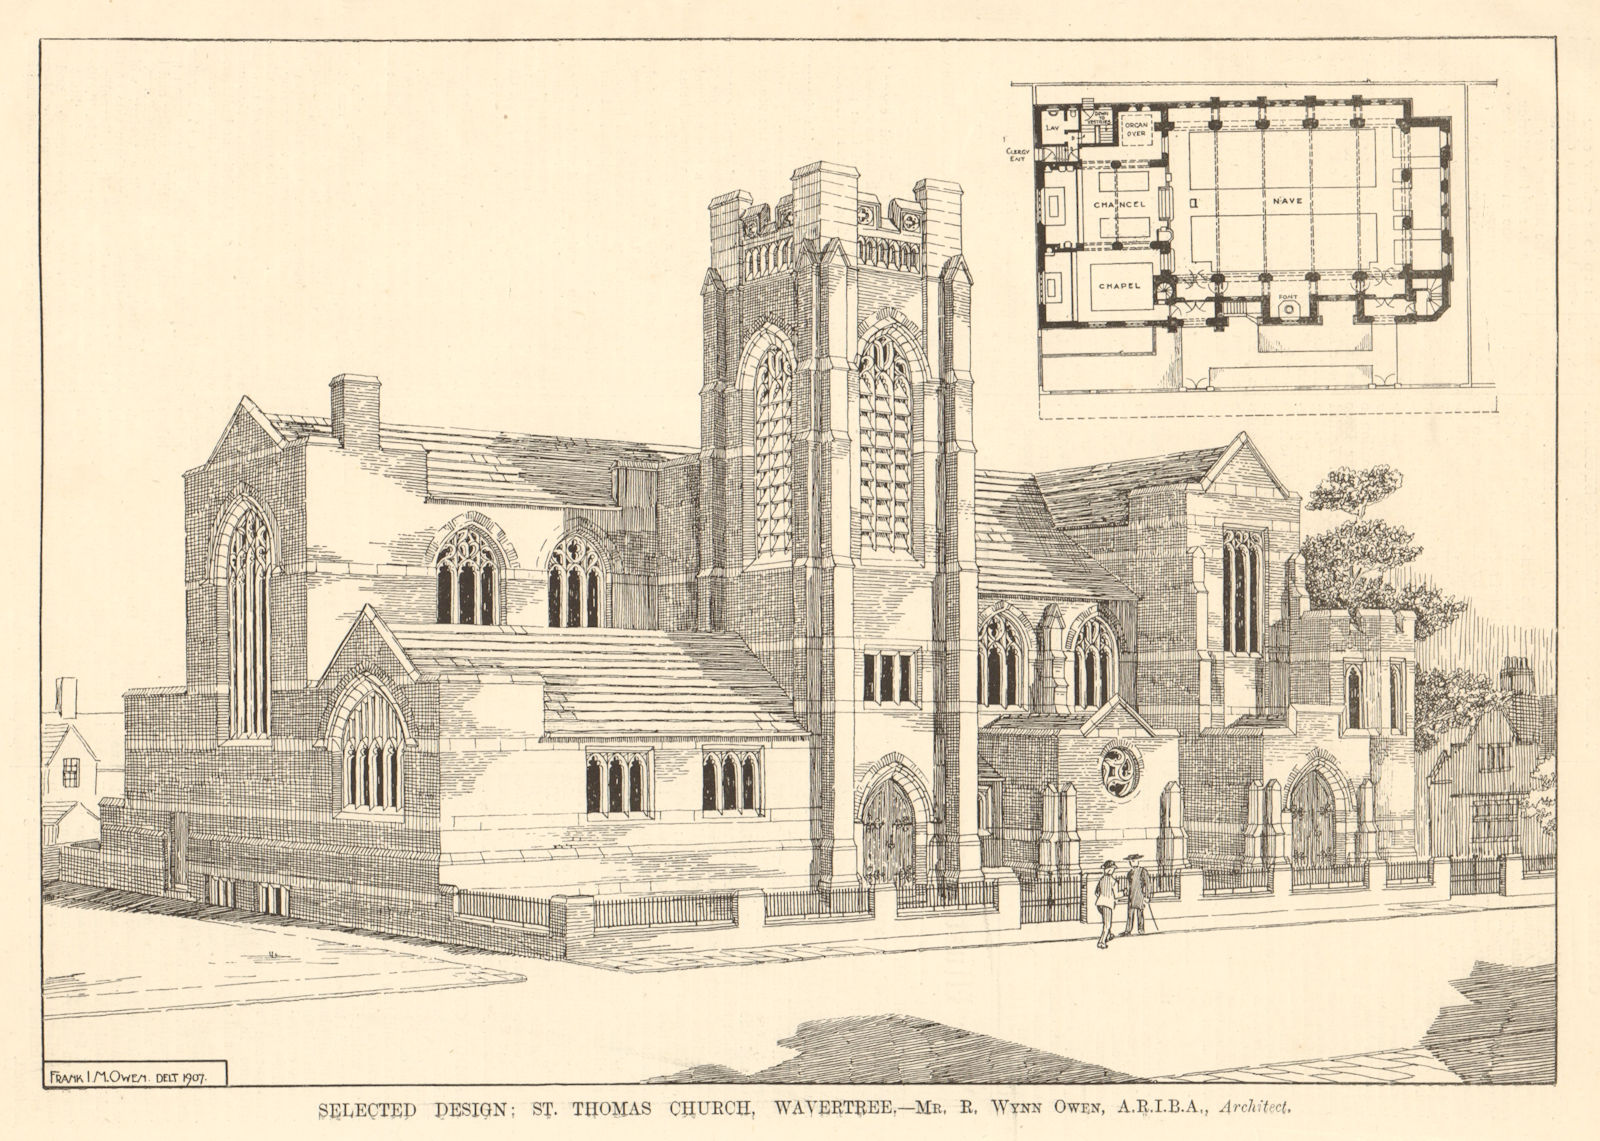 St Thomas Church, Wavertree. R. Wynn Owen, ARIBA, Architect. Lancashire 1907